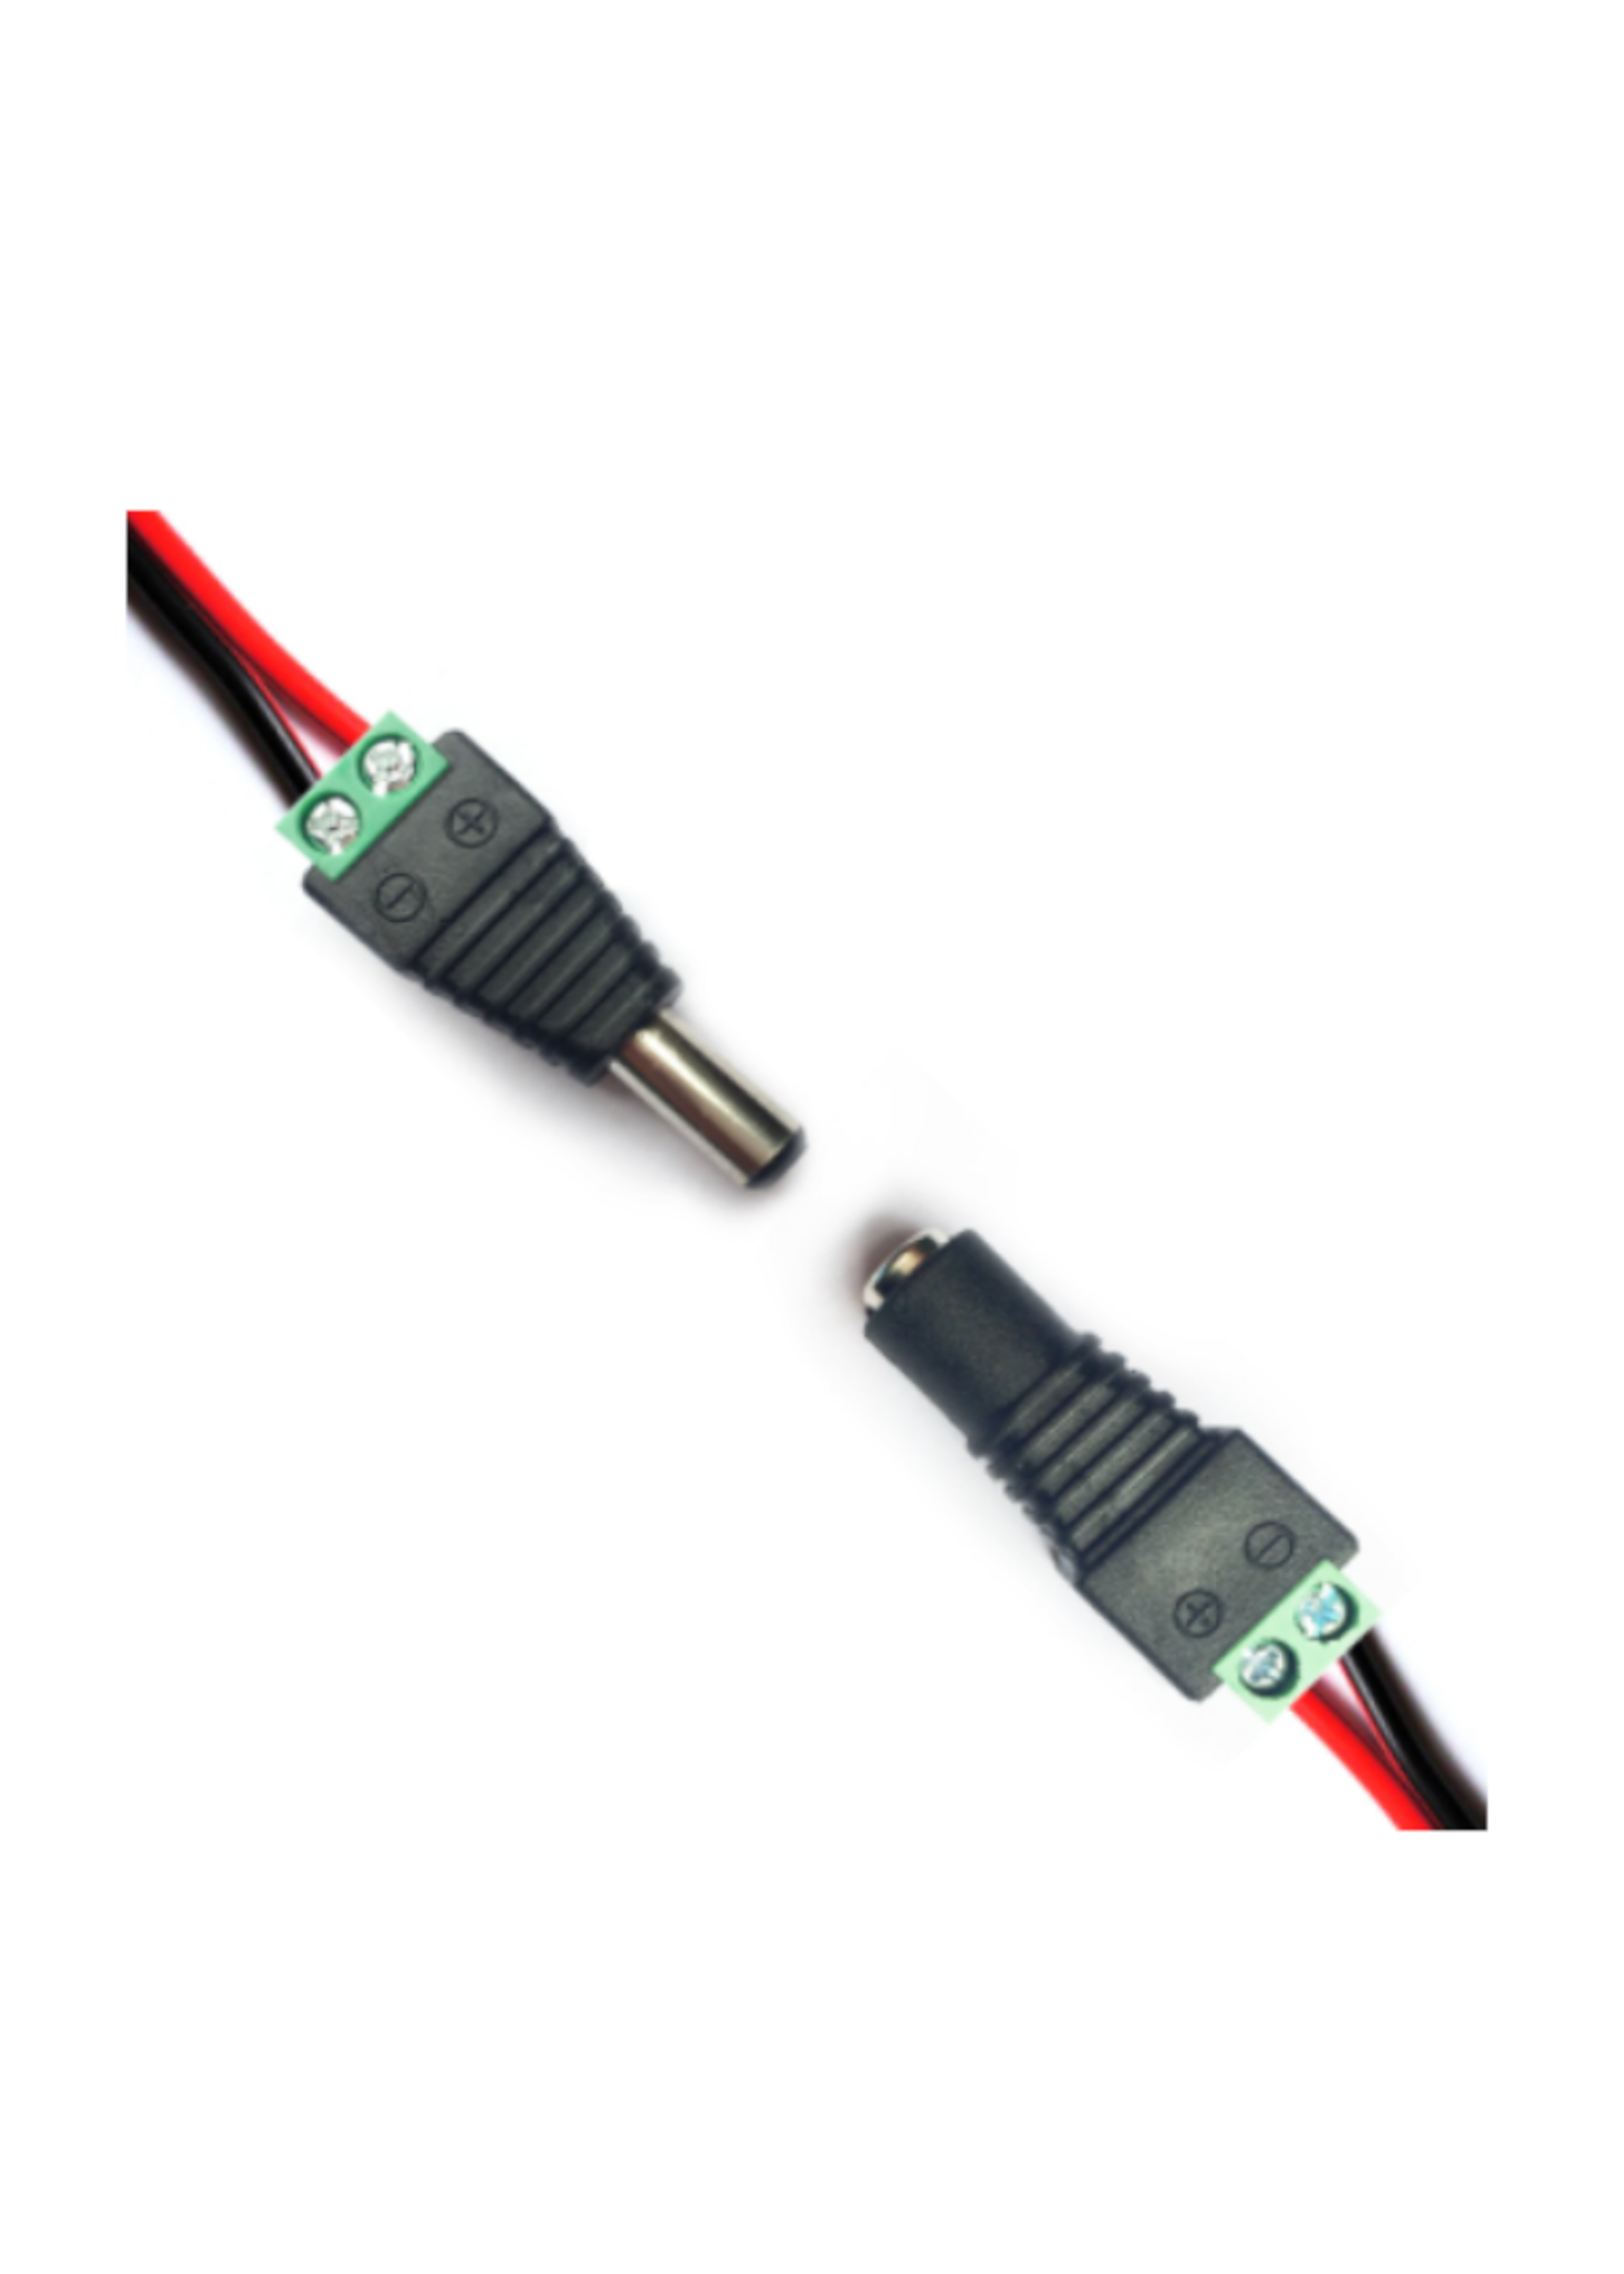 AZ Male Barrel Connector Plug 5.5mm x 2.1mm for CCTV Cameras/Single Color LED Strips